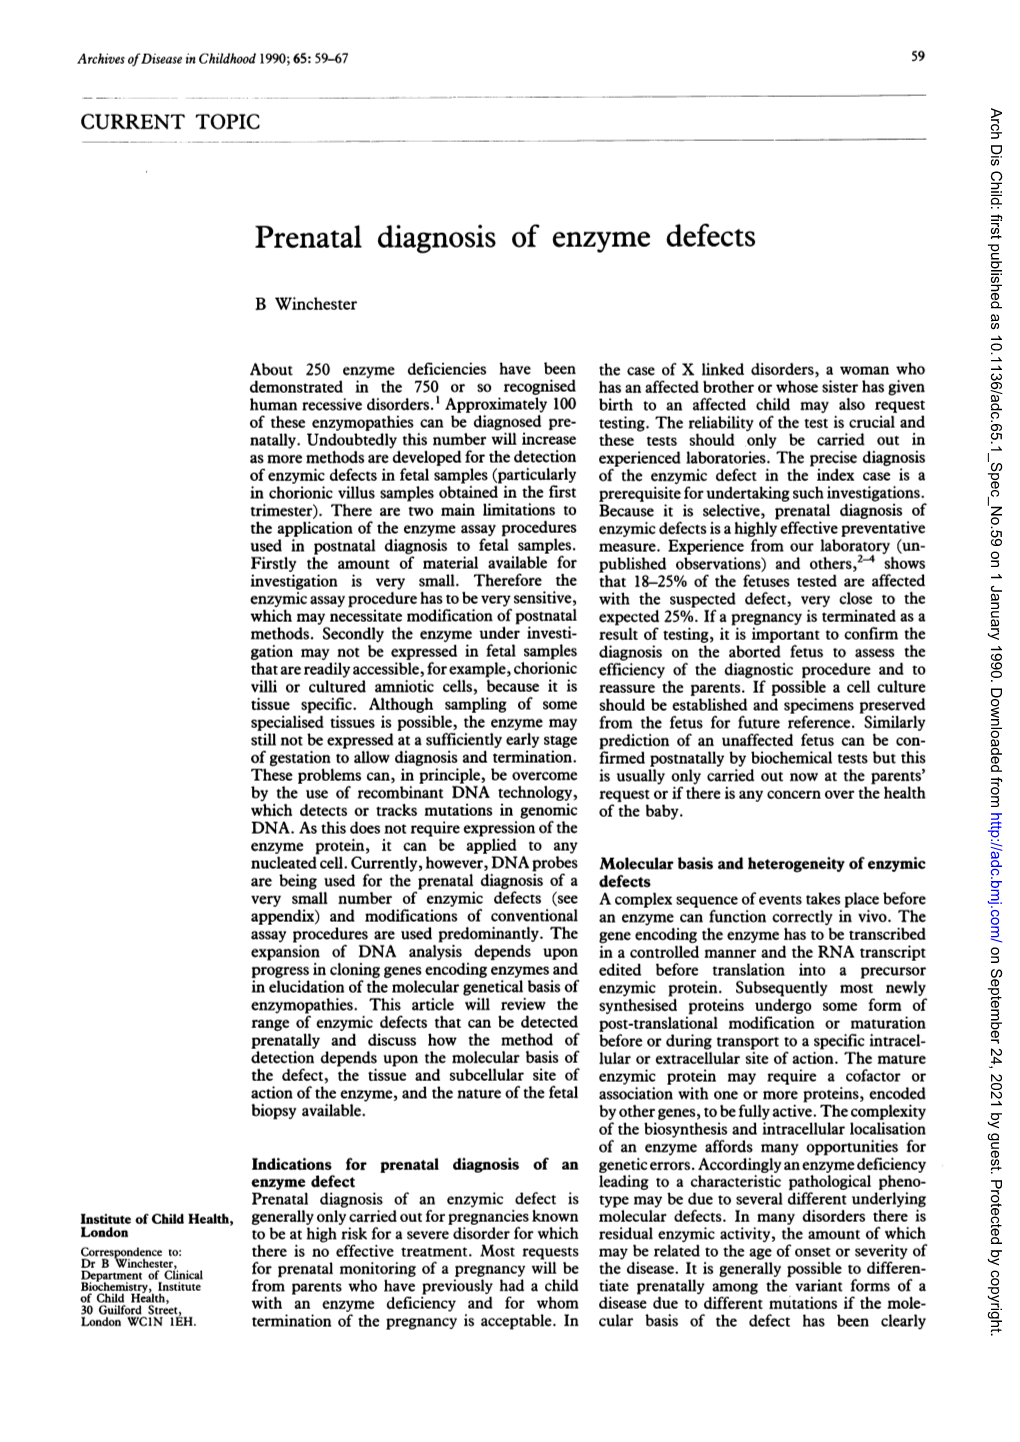 Prenatal Diagnosis of Enzyme Defects